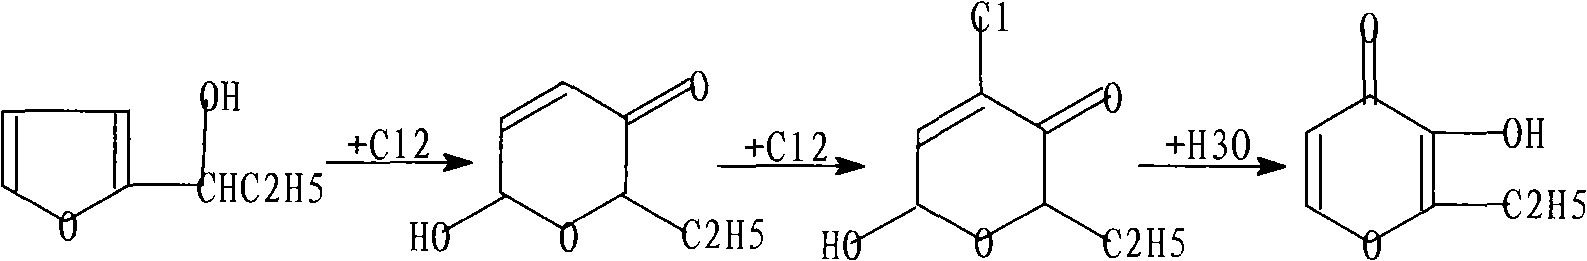 Ethyl maltol synthetic method